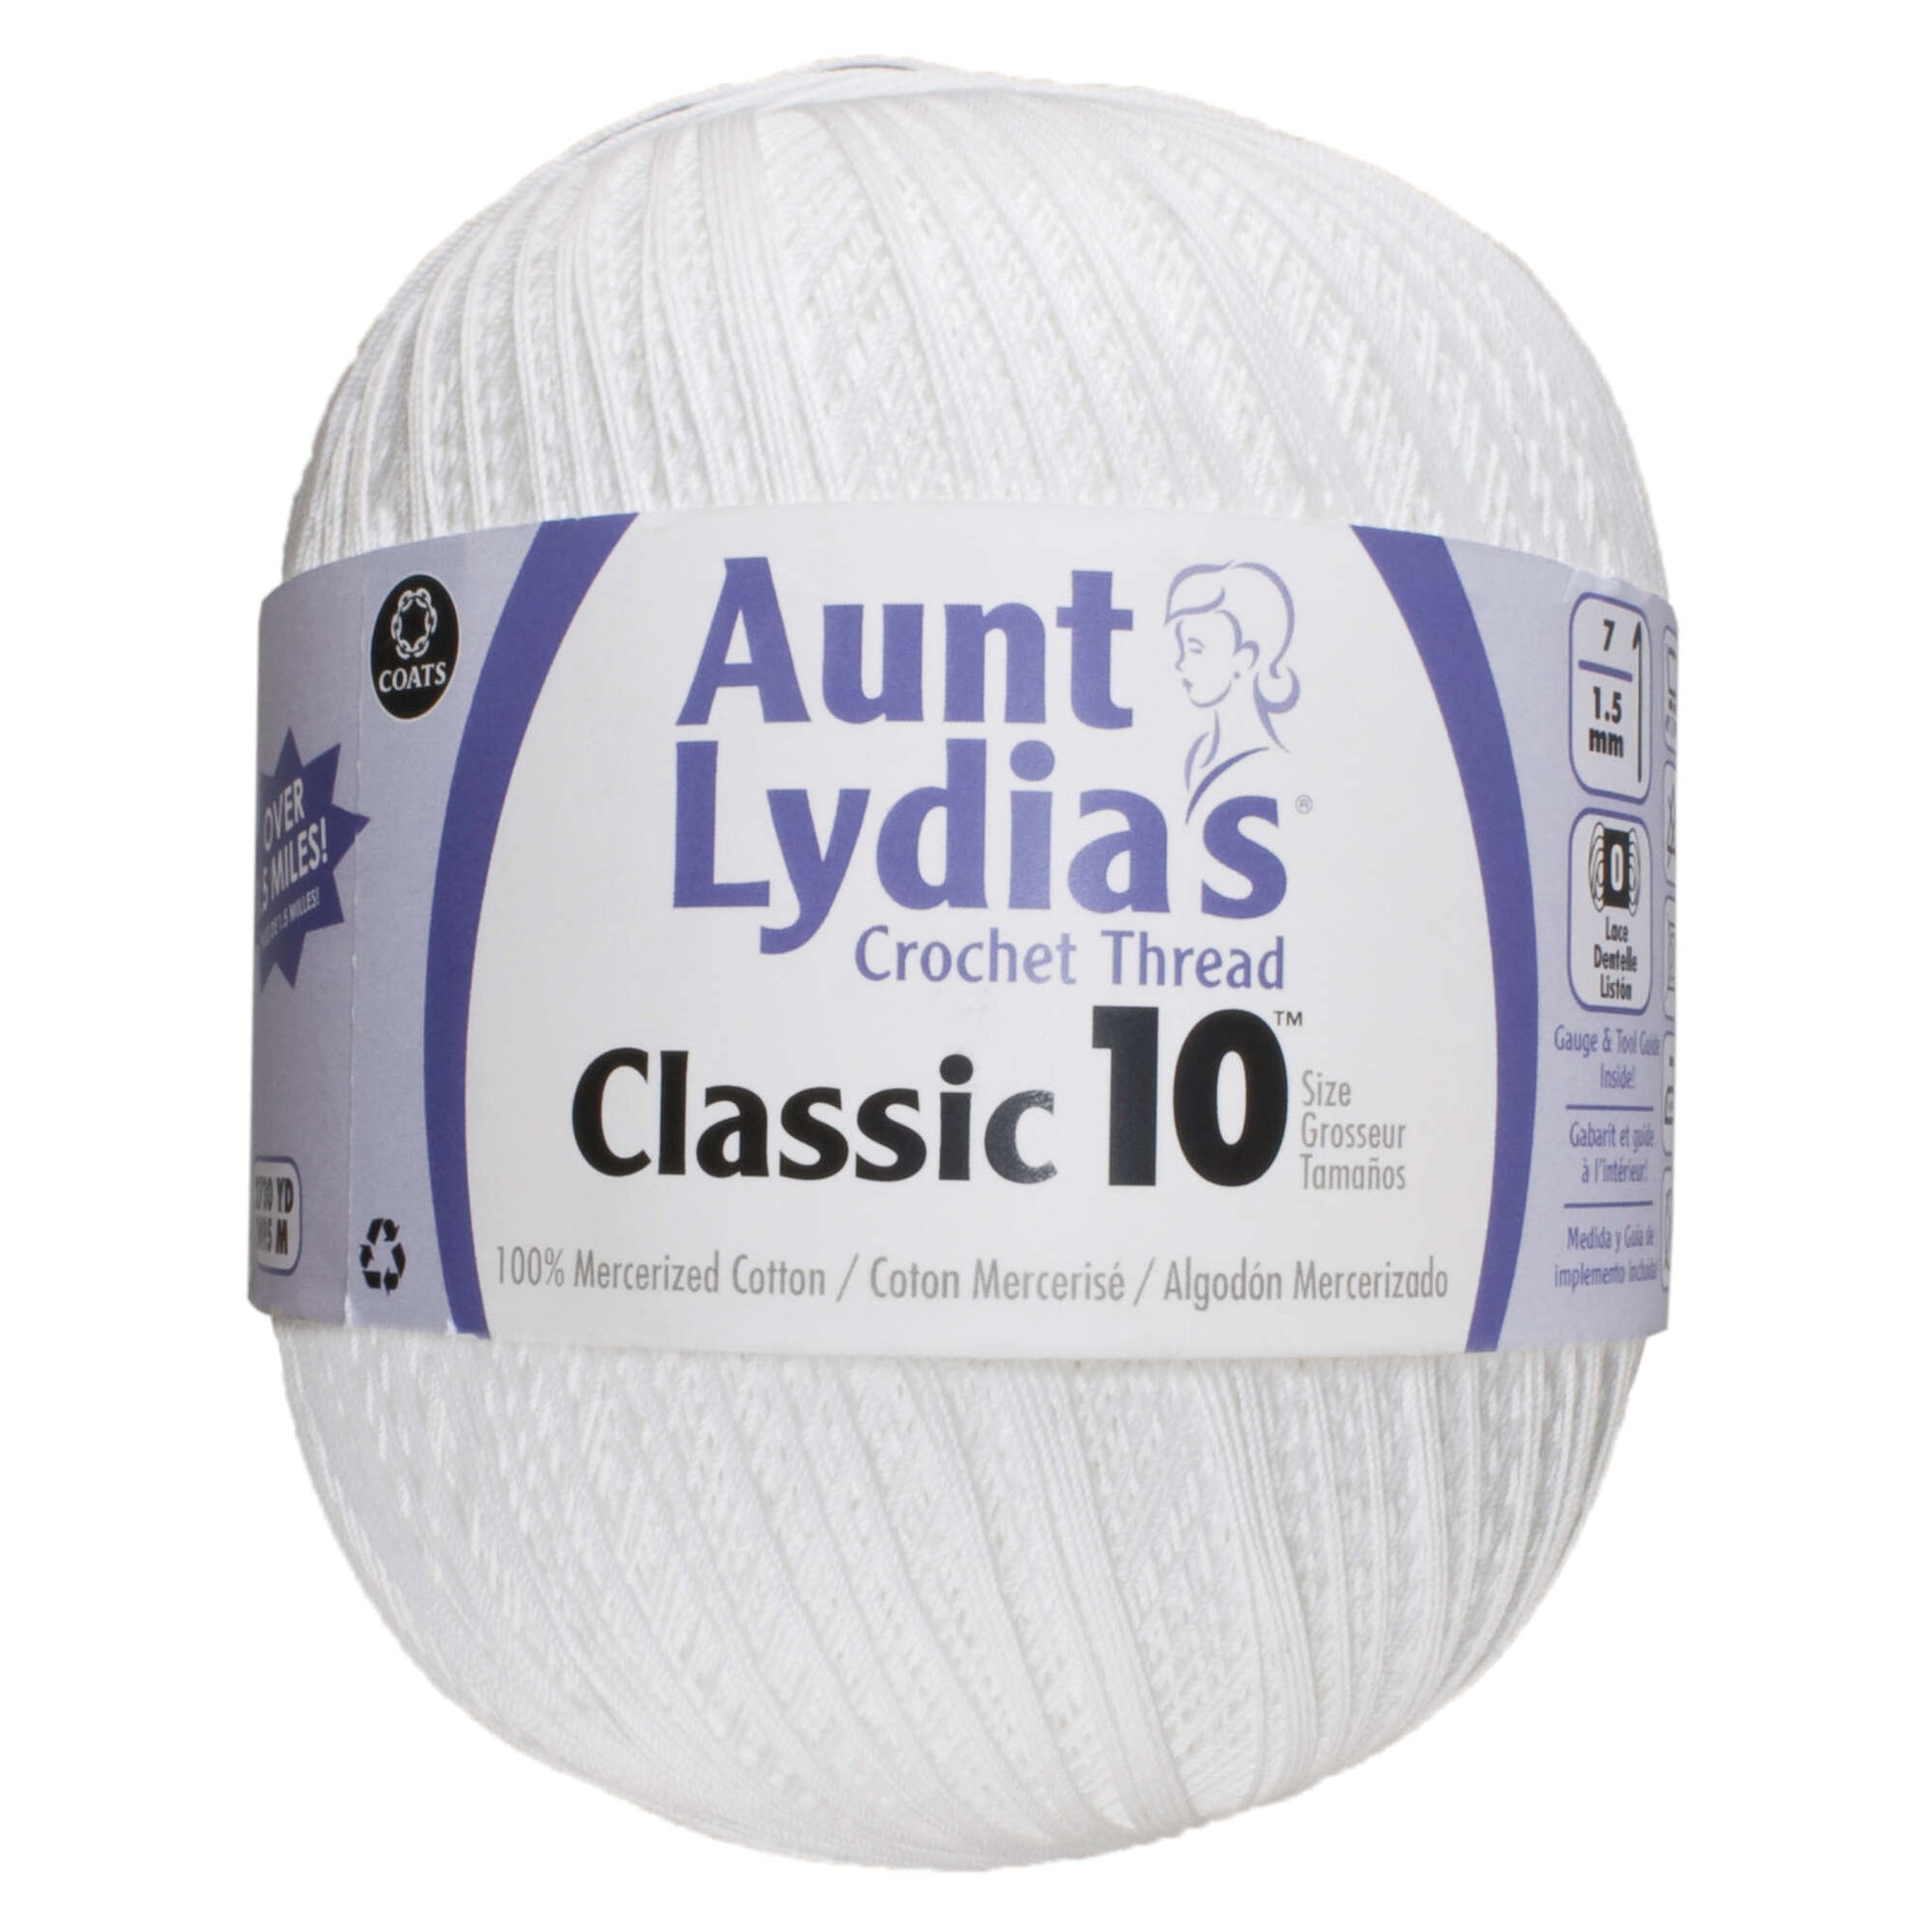 Aunt Lydia's Classic Crochet Thread (Jumbo) Size 10